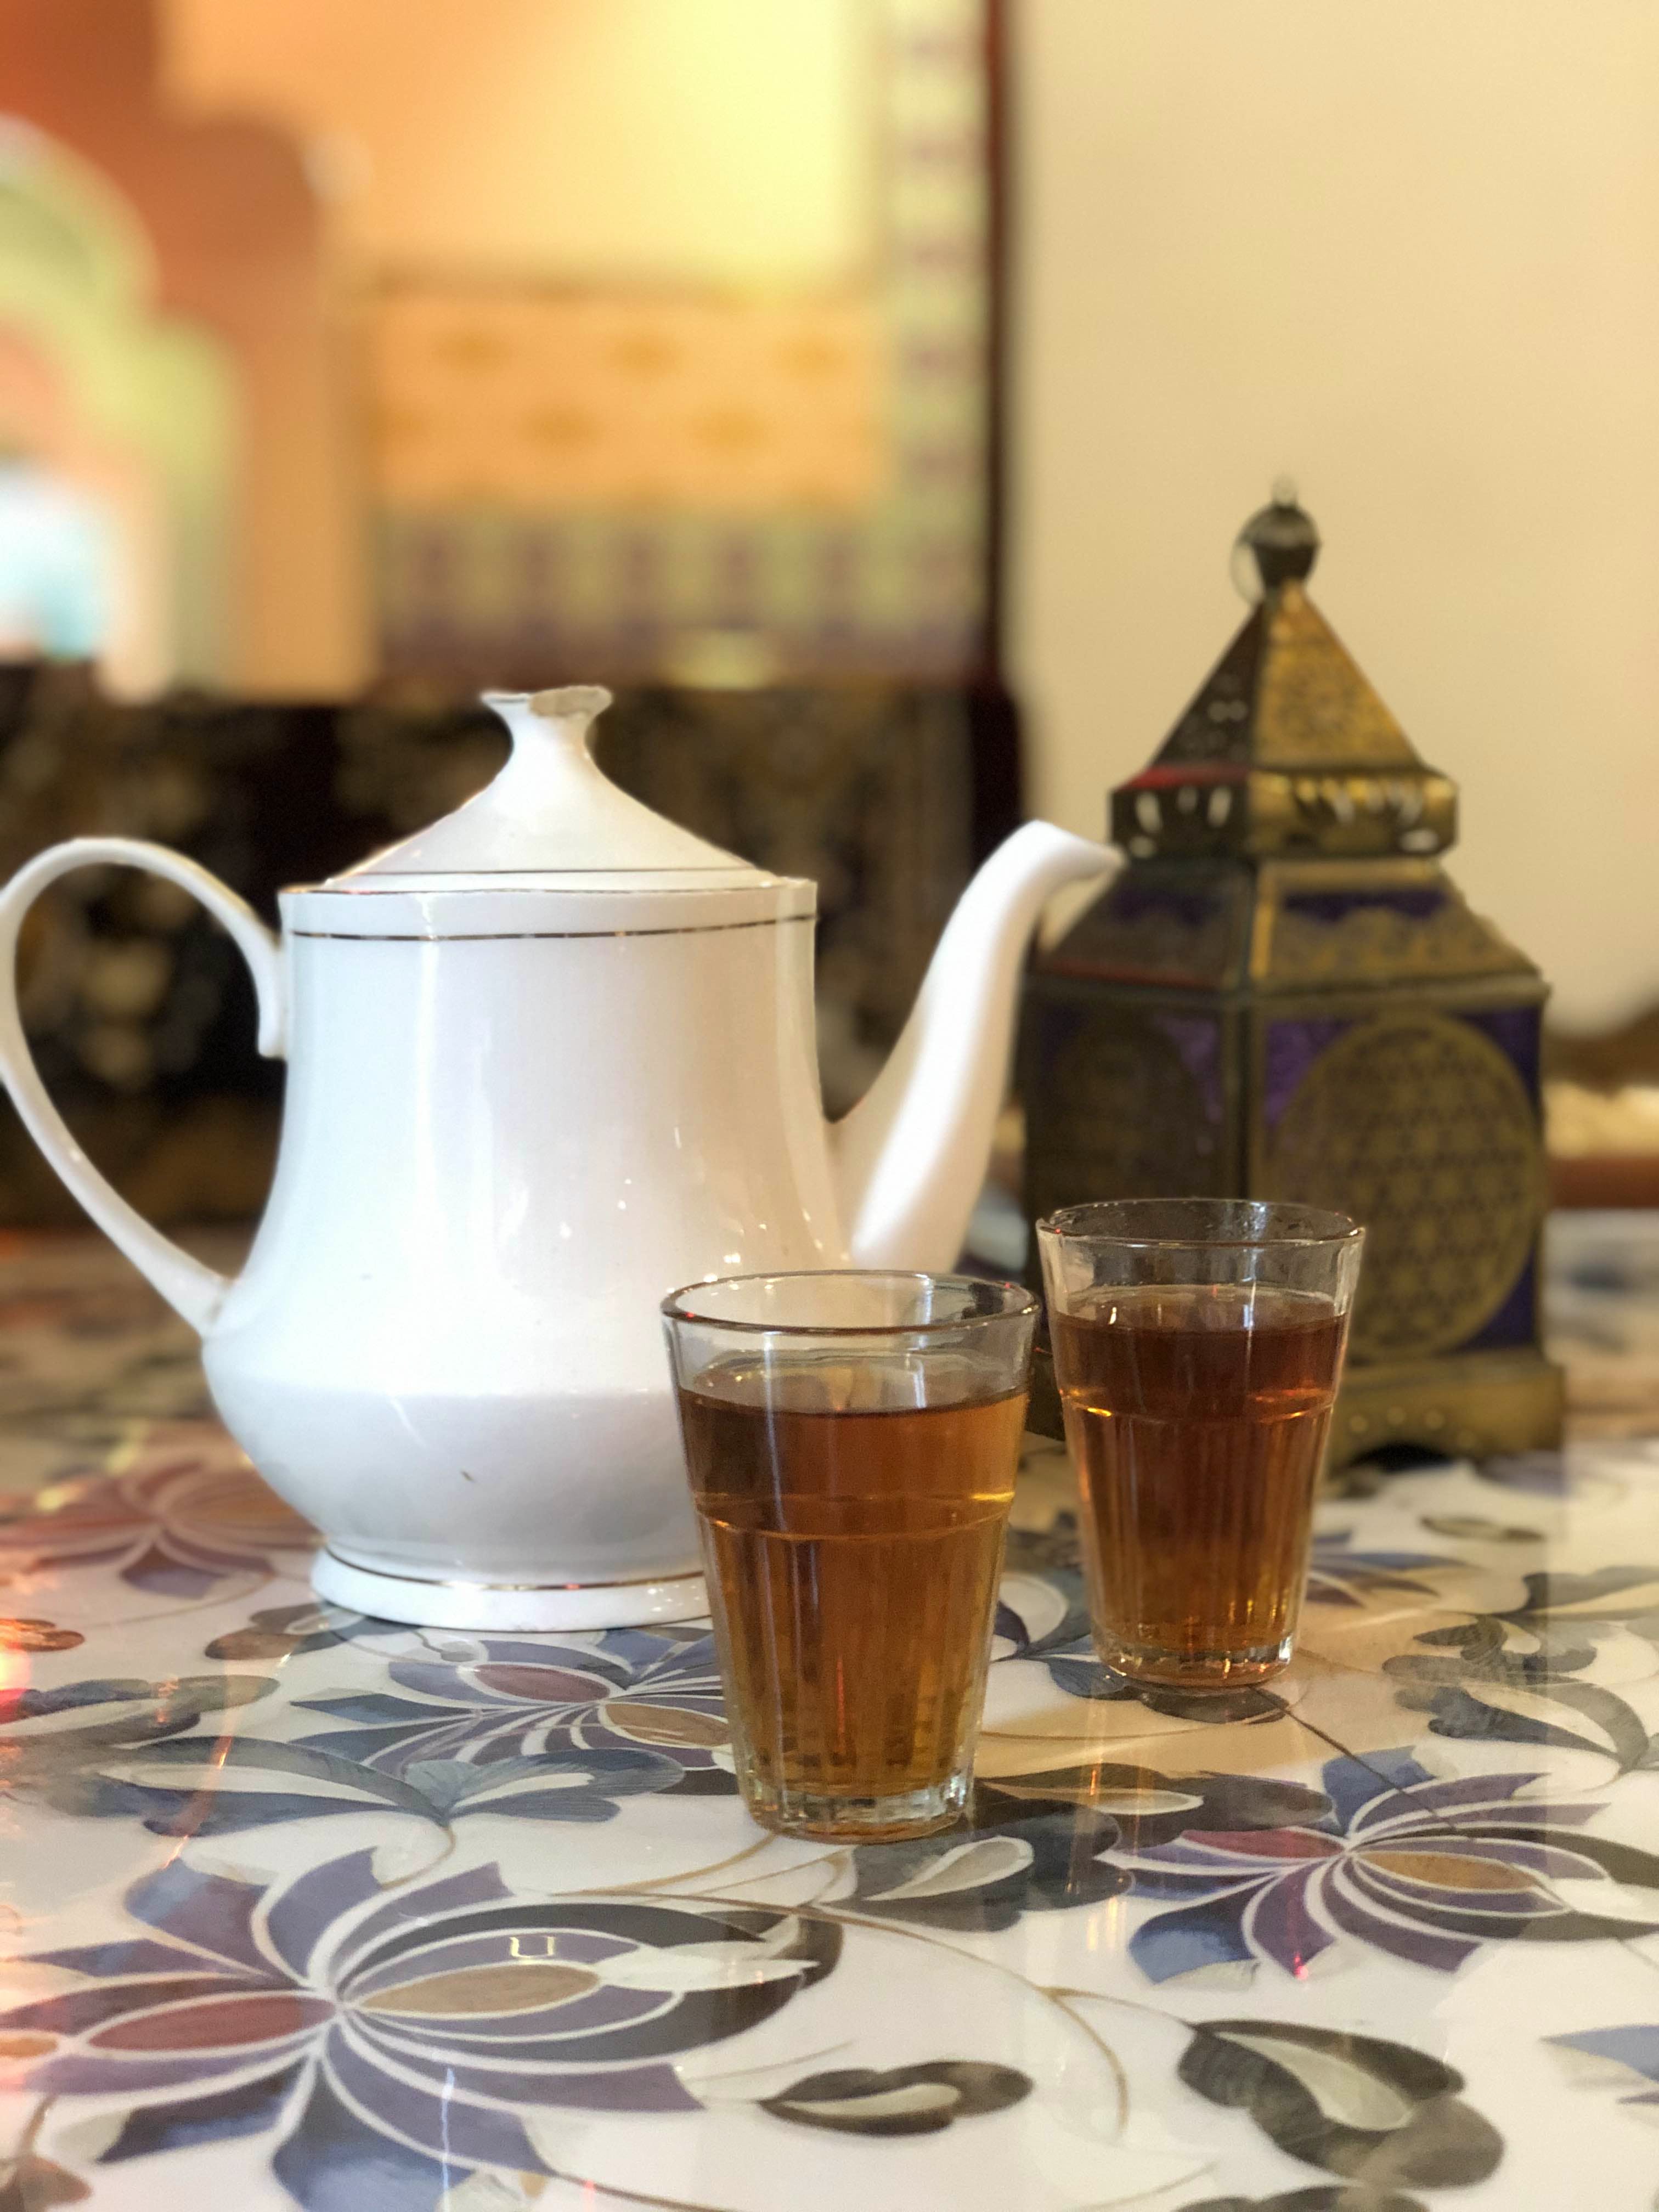 Drink,Cup,Chinese herb tea,Serveware,Cup,Tea,Teapot,Tableware,Earl grey tea,Still life